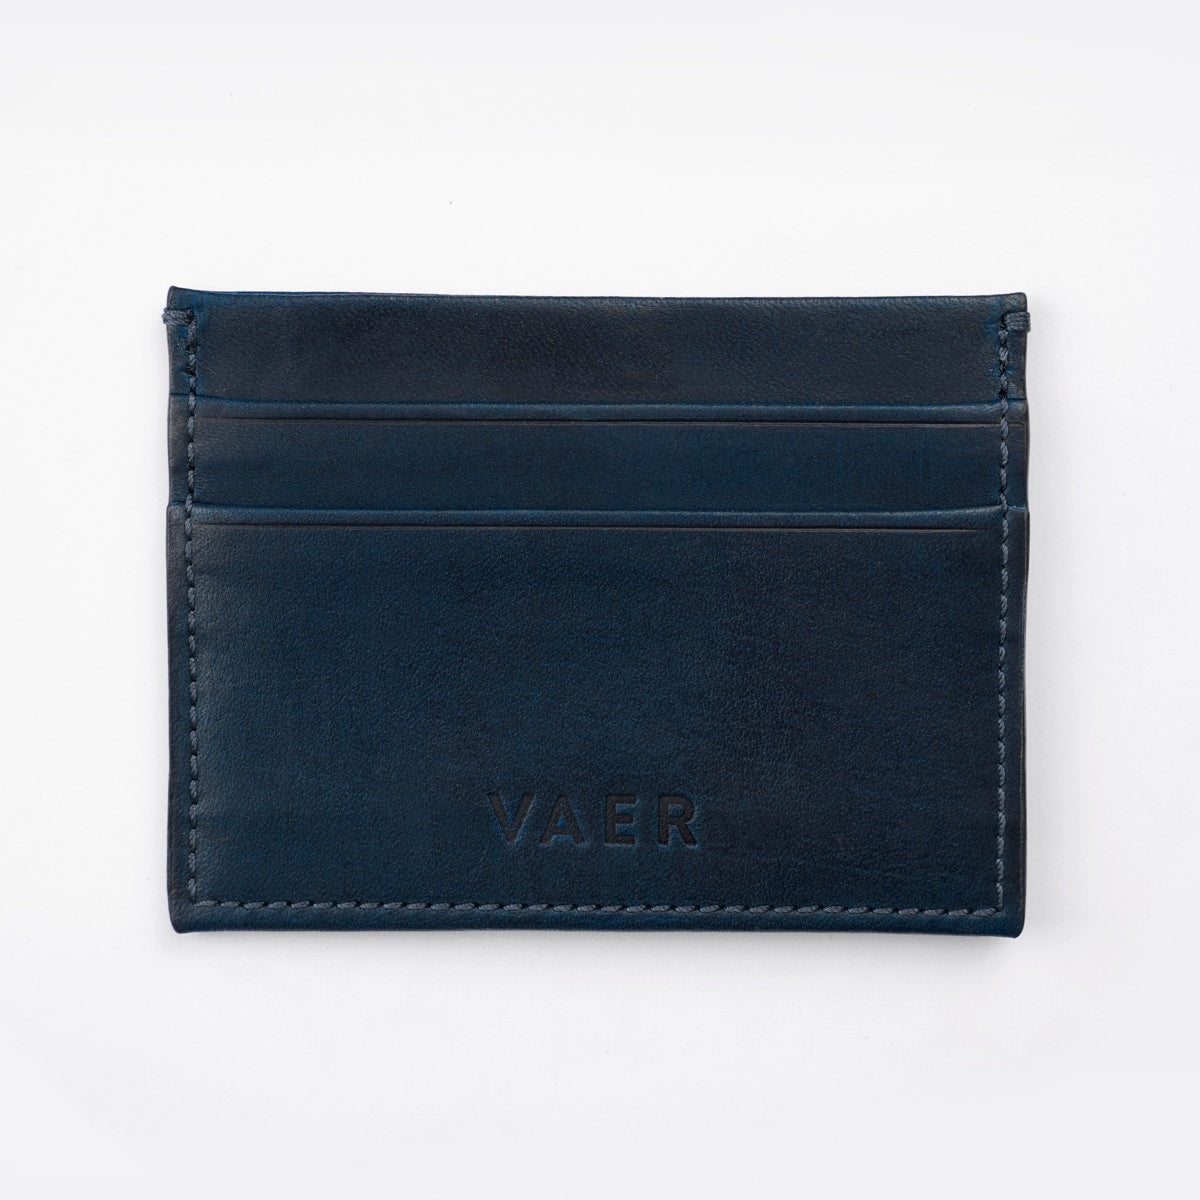 Slim Wallet Genuine Leather Credit Card Holder Unisex 6 Card -  Israel